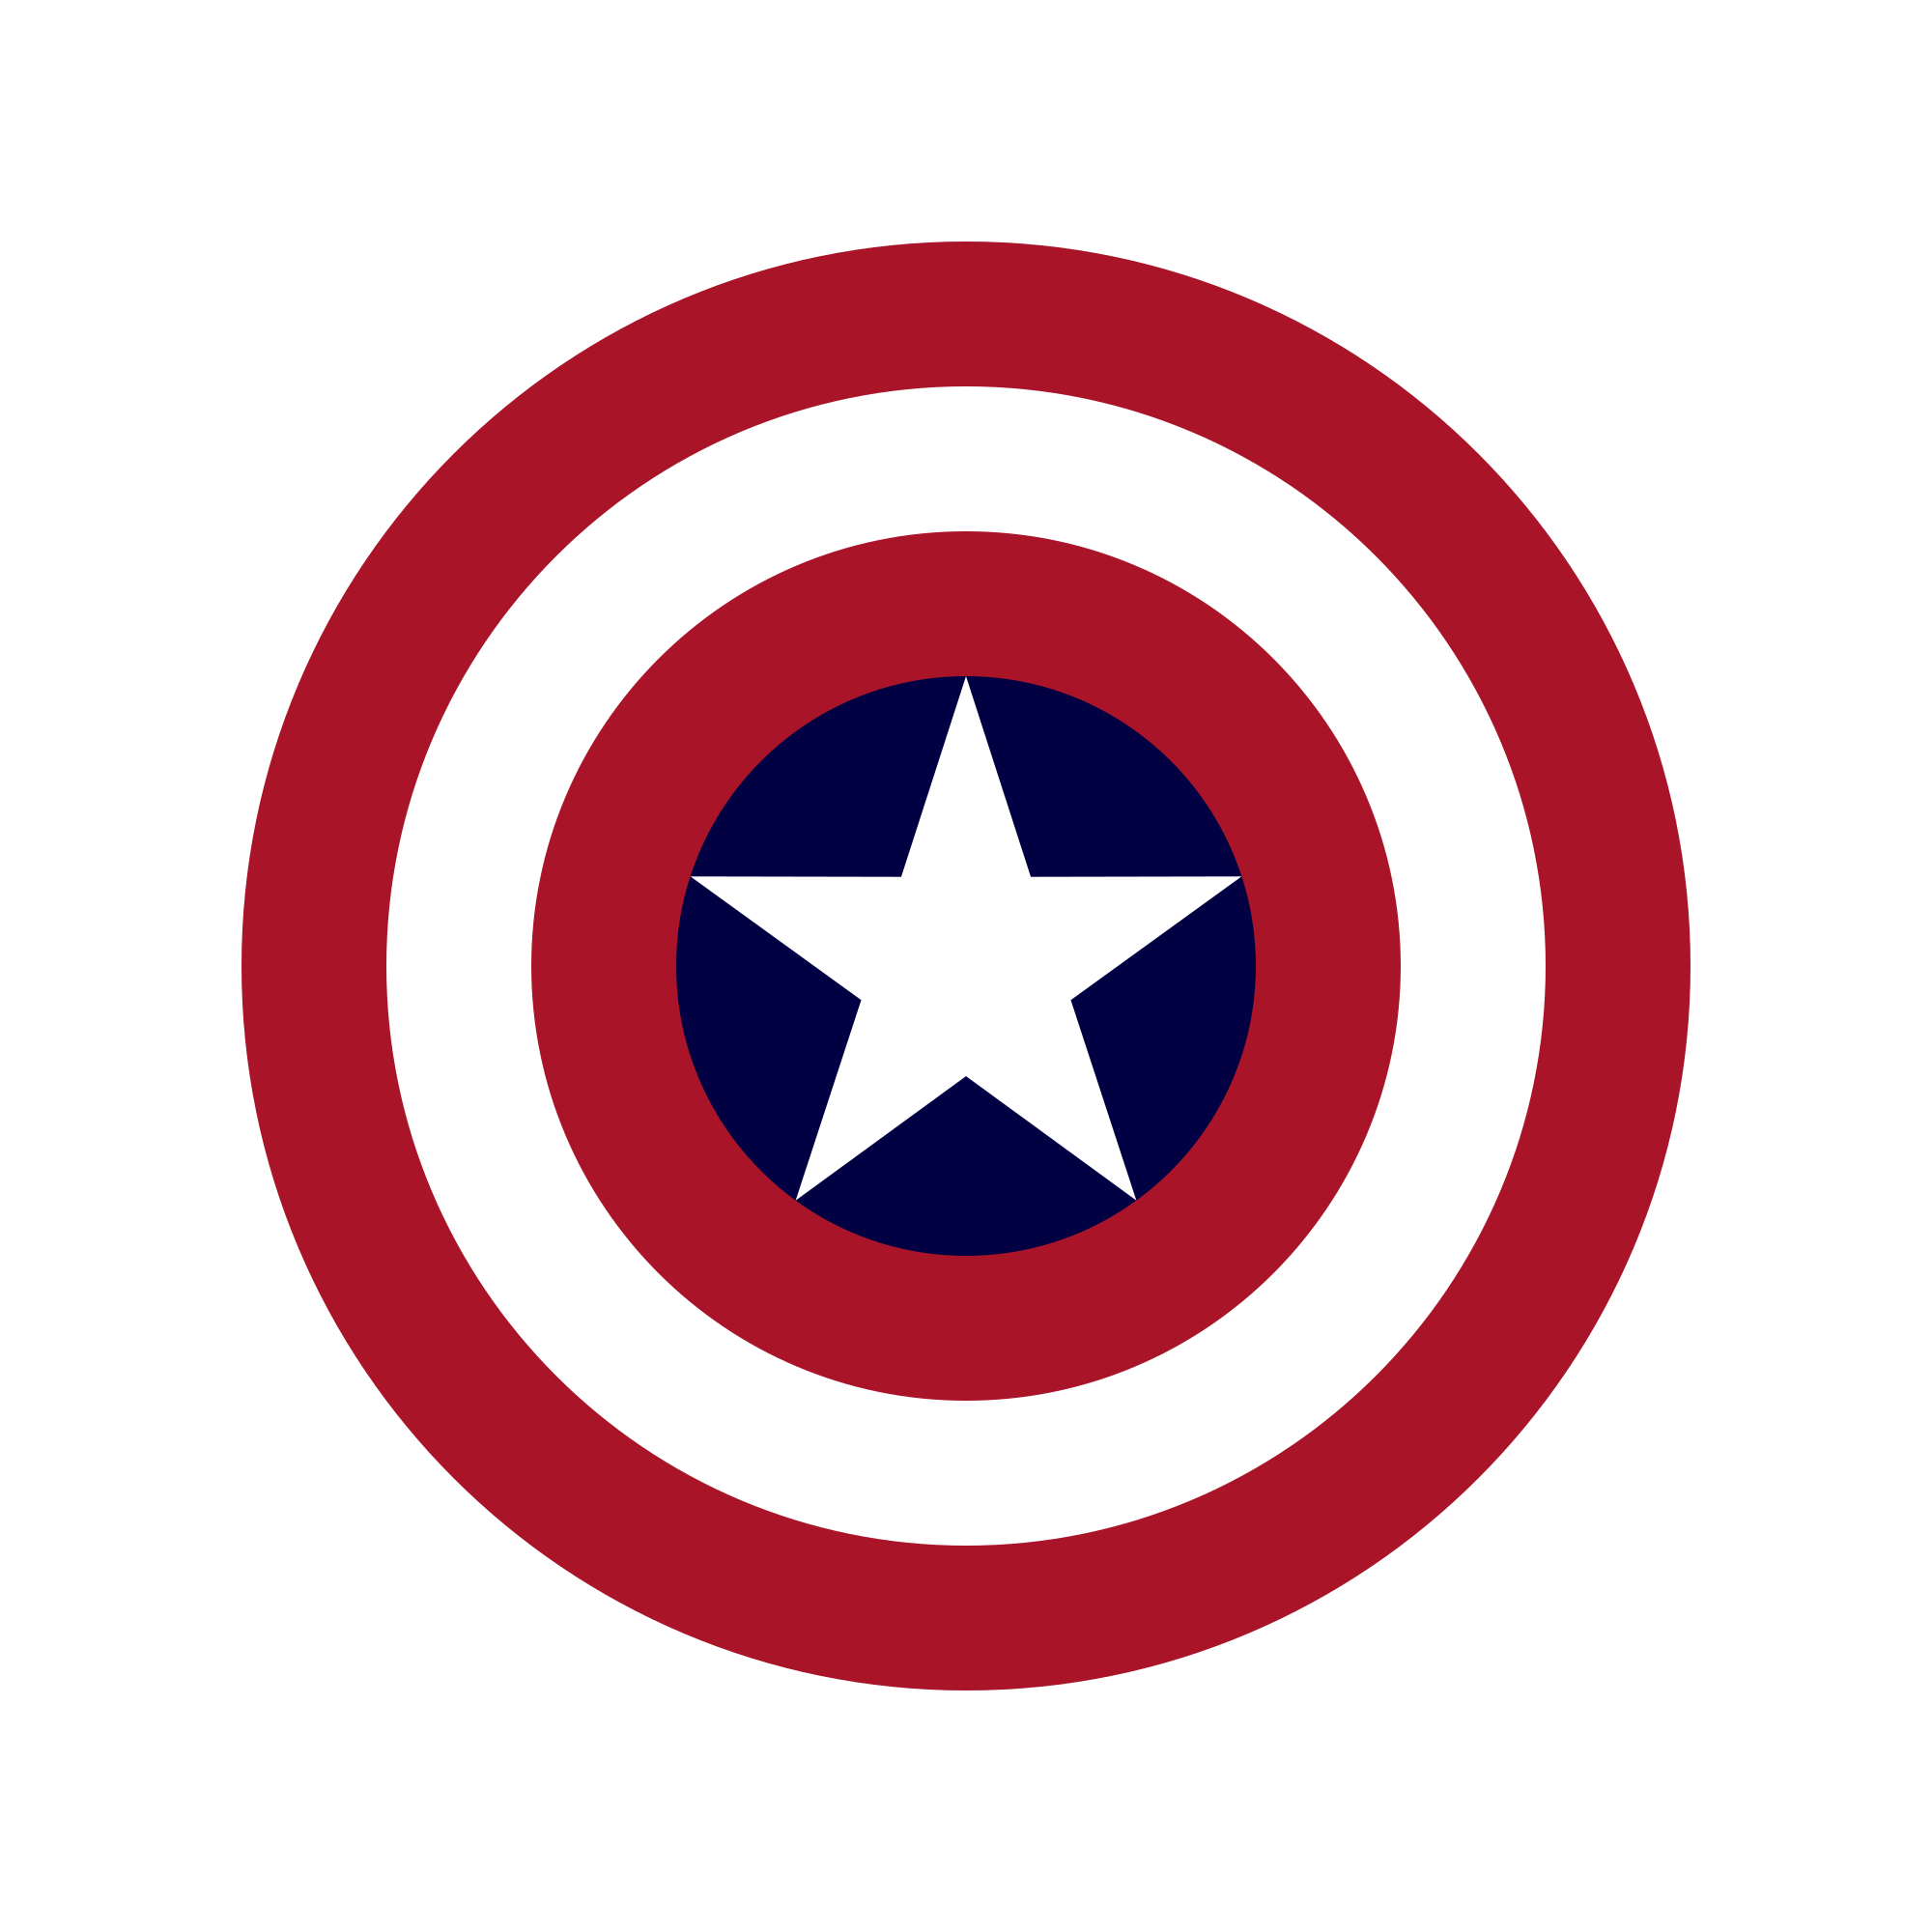 Captain America Logo - Captain America's shield